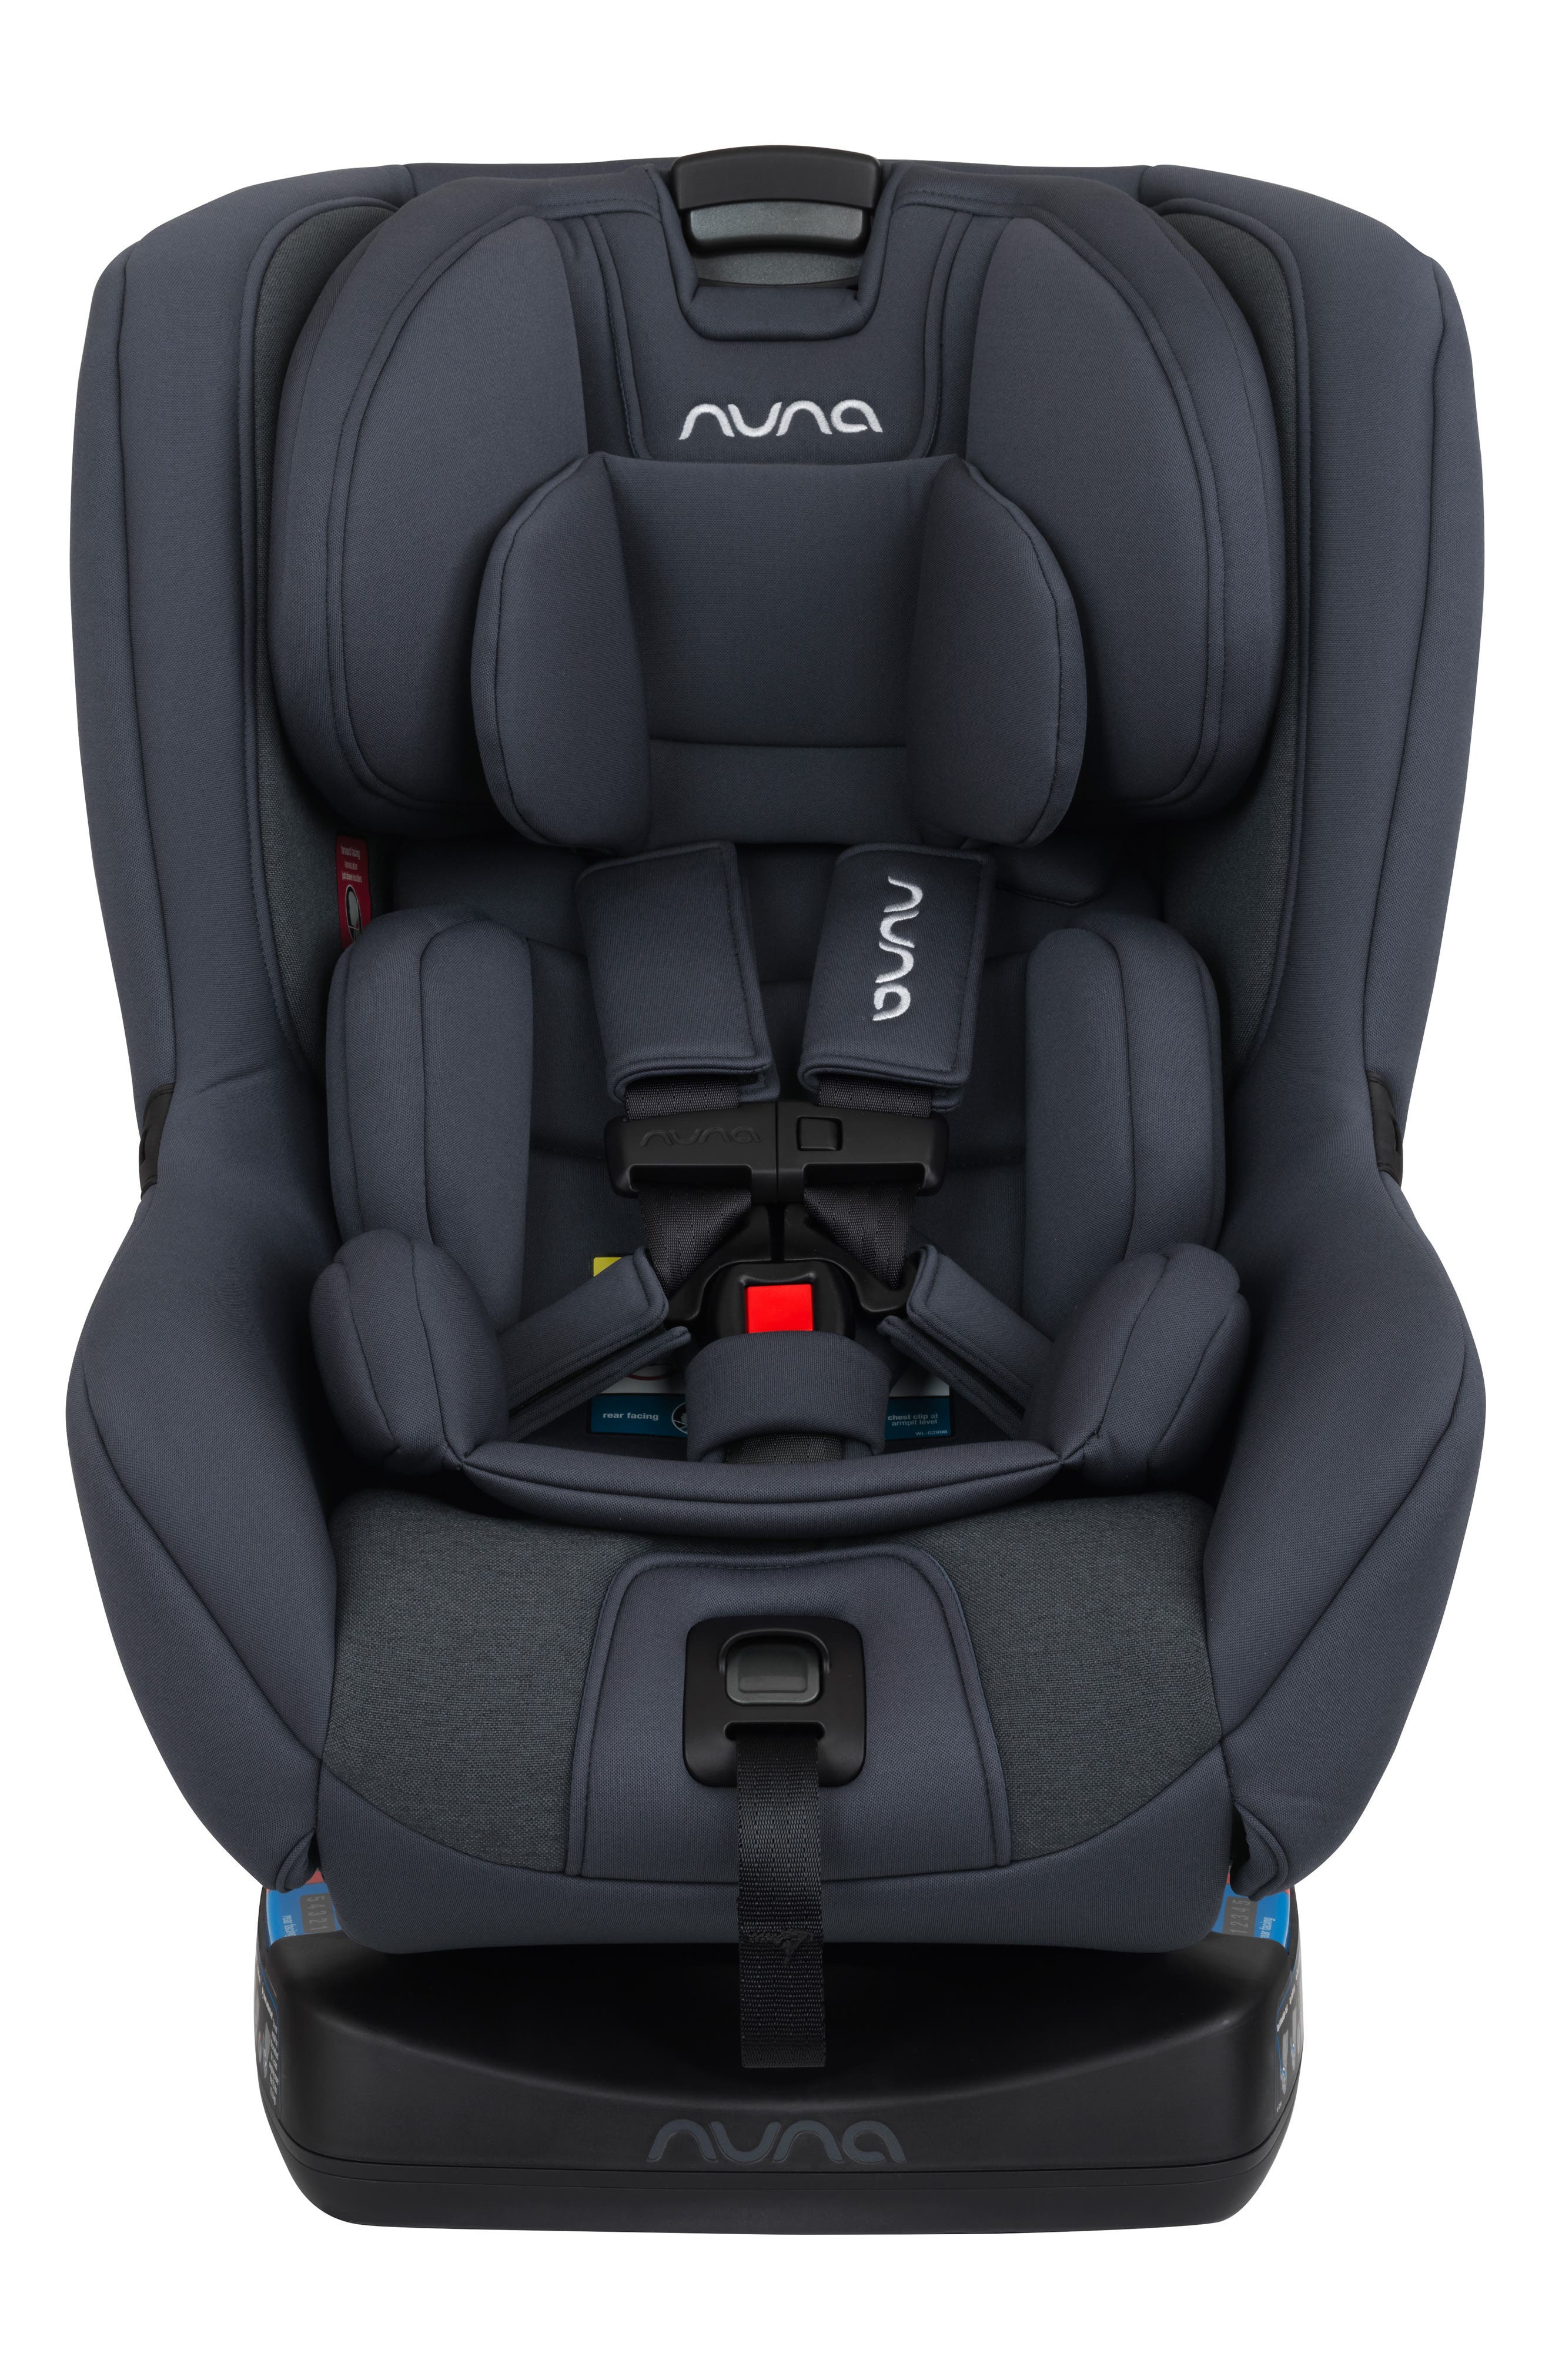 nordstrom anniversary sale car seat